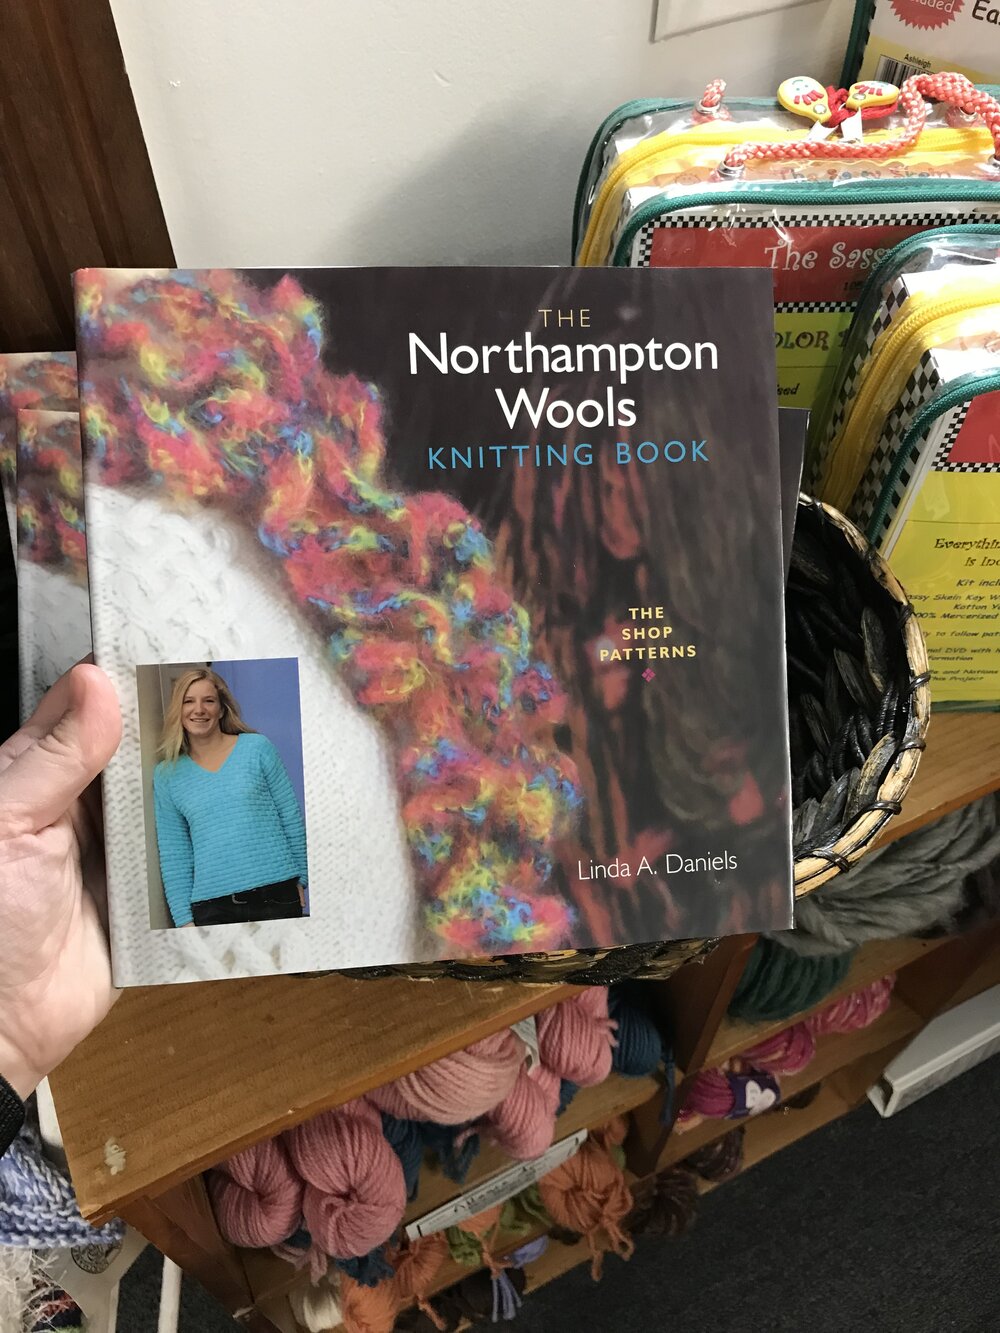 Linda's Book of Shop Patterns!